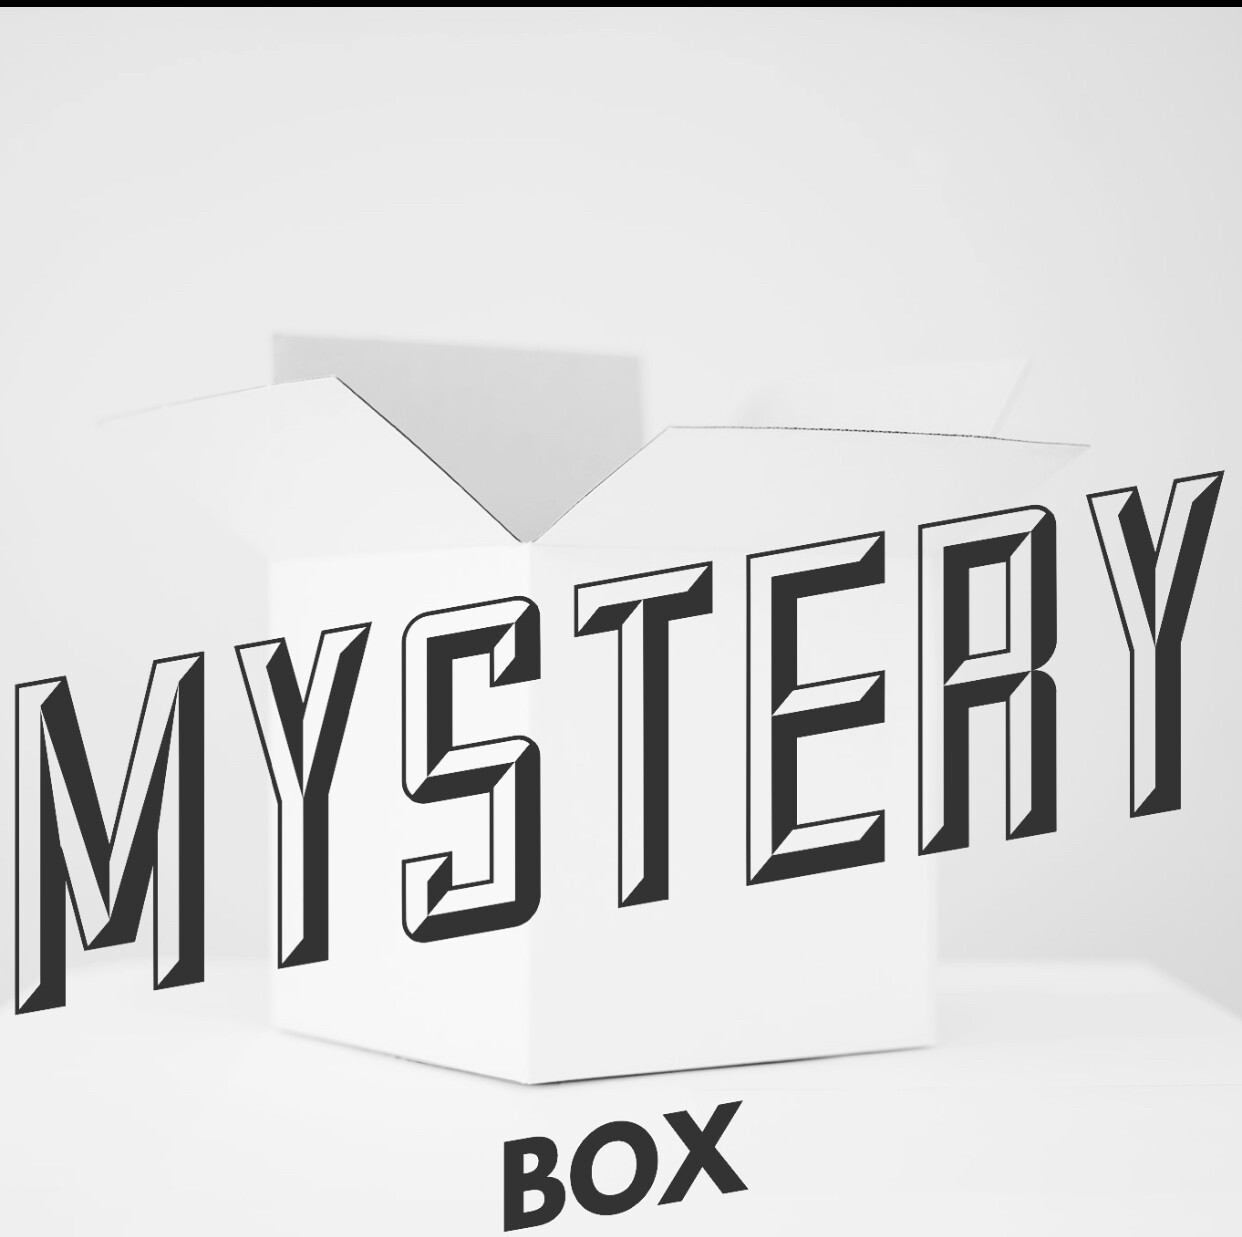 XXL Mystery Box $222.22